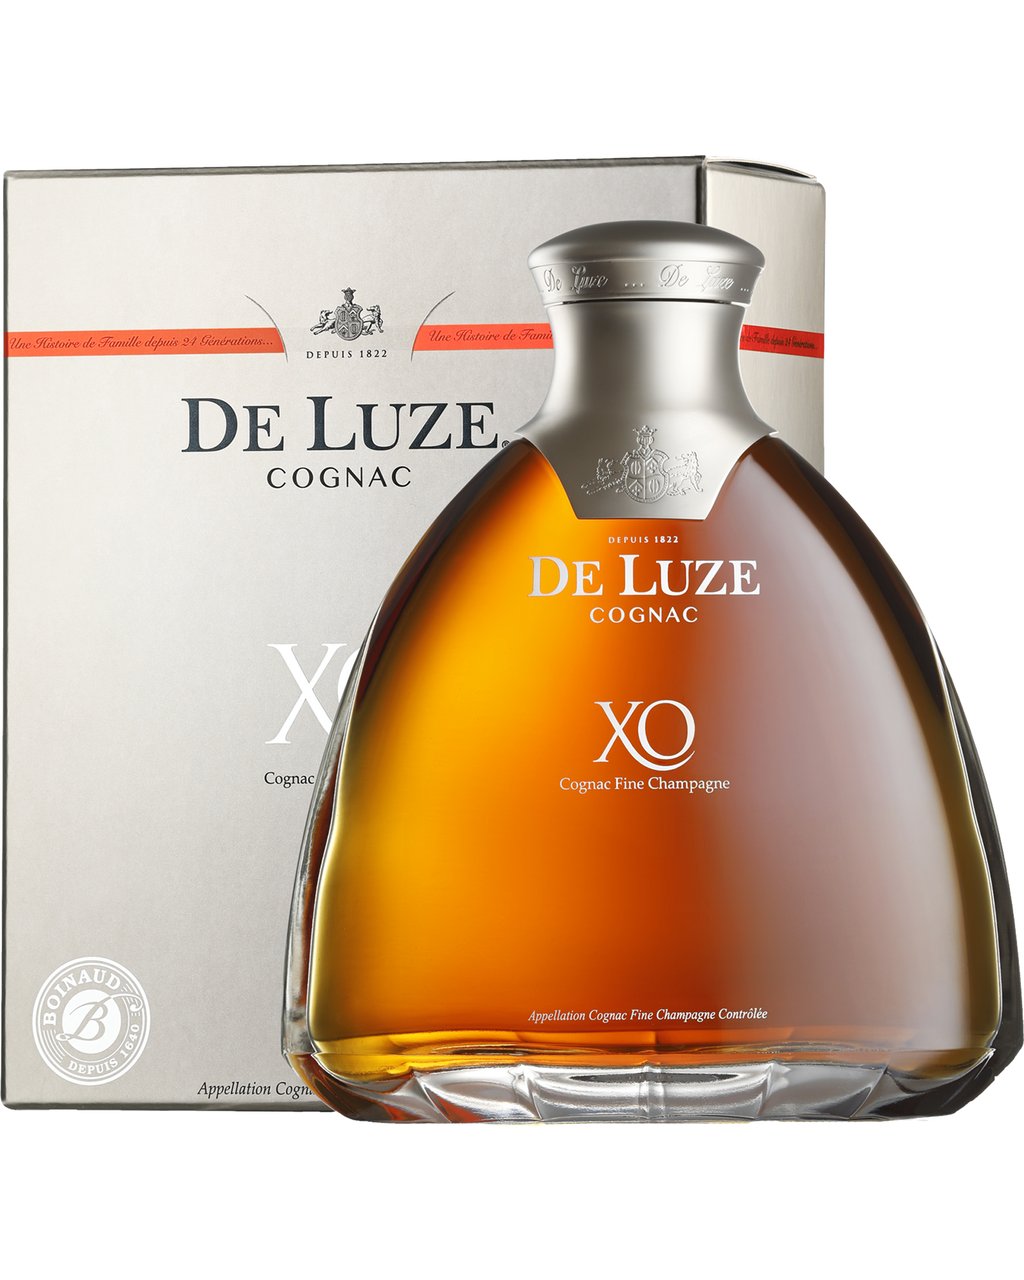 De Luze Xo Fine Champagne Online 700ml Deals Buy Murphy\'s @Best Cognac Delivery Prices): Dan (Unbeatable with 